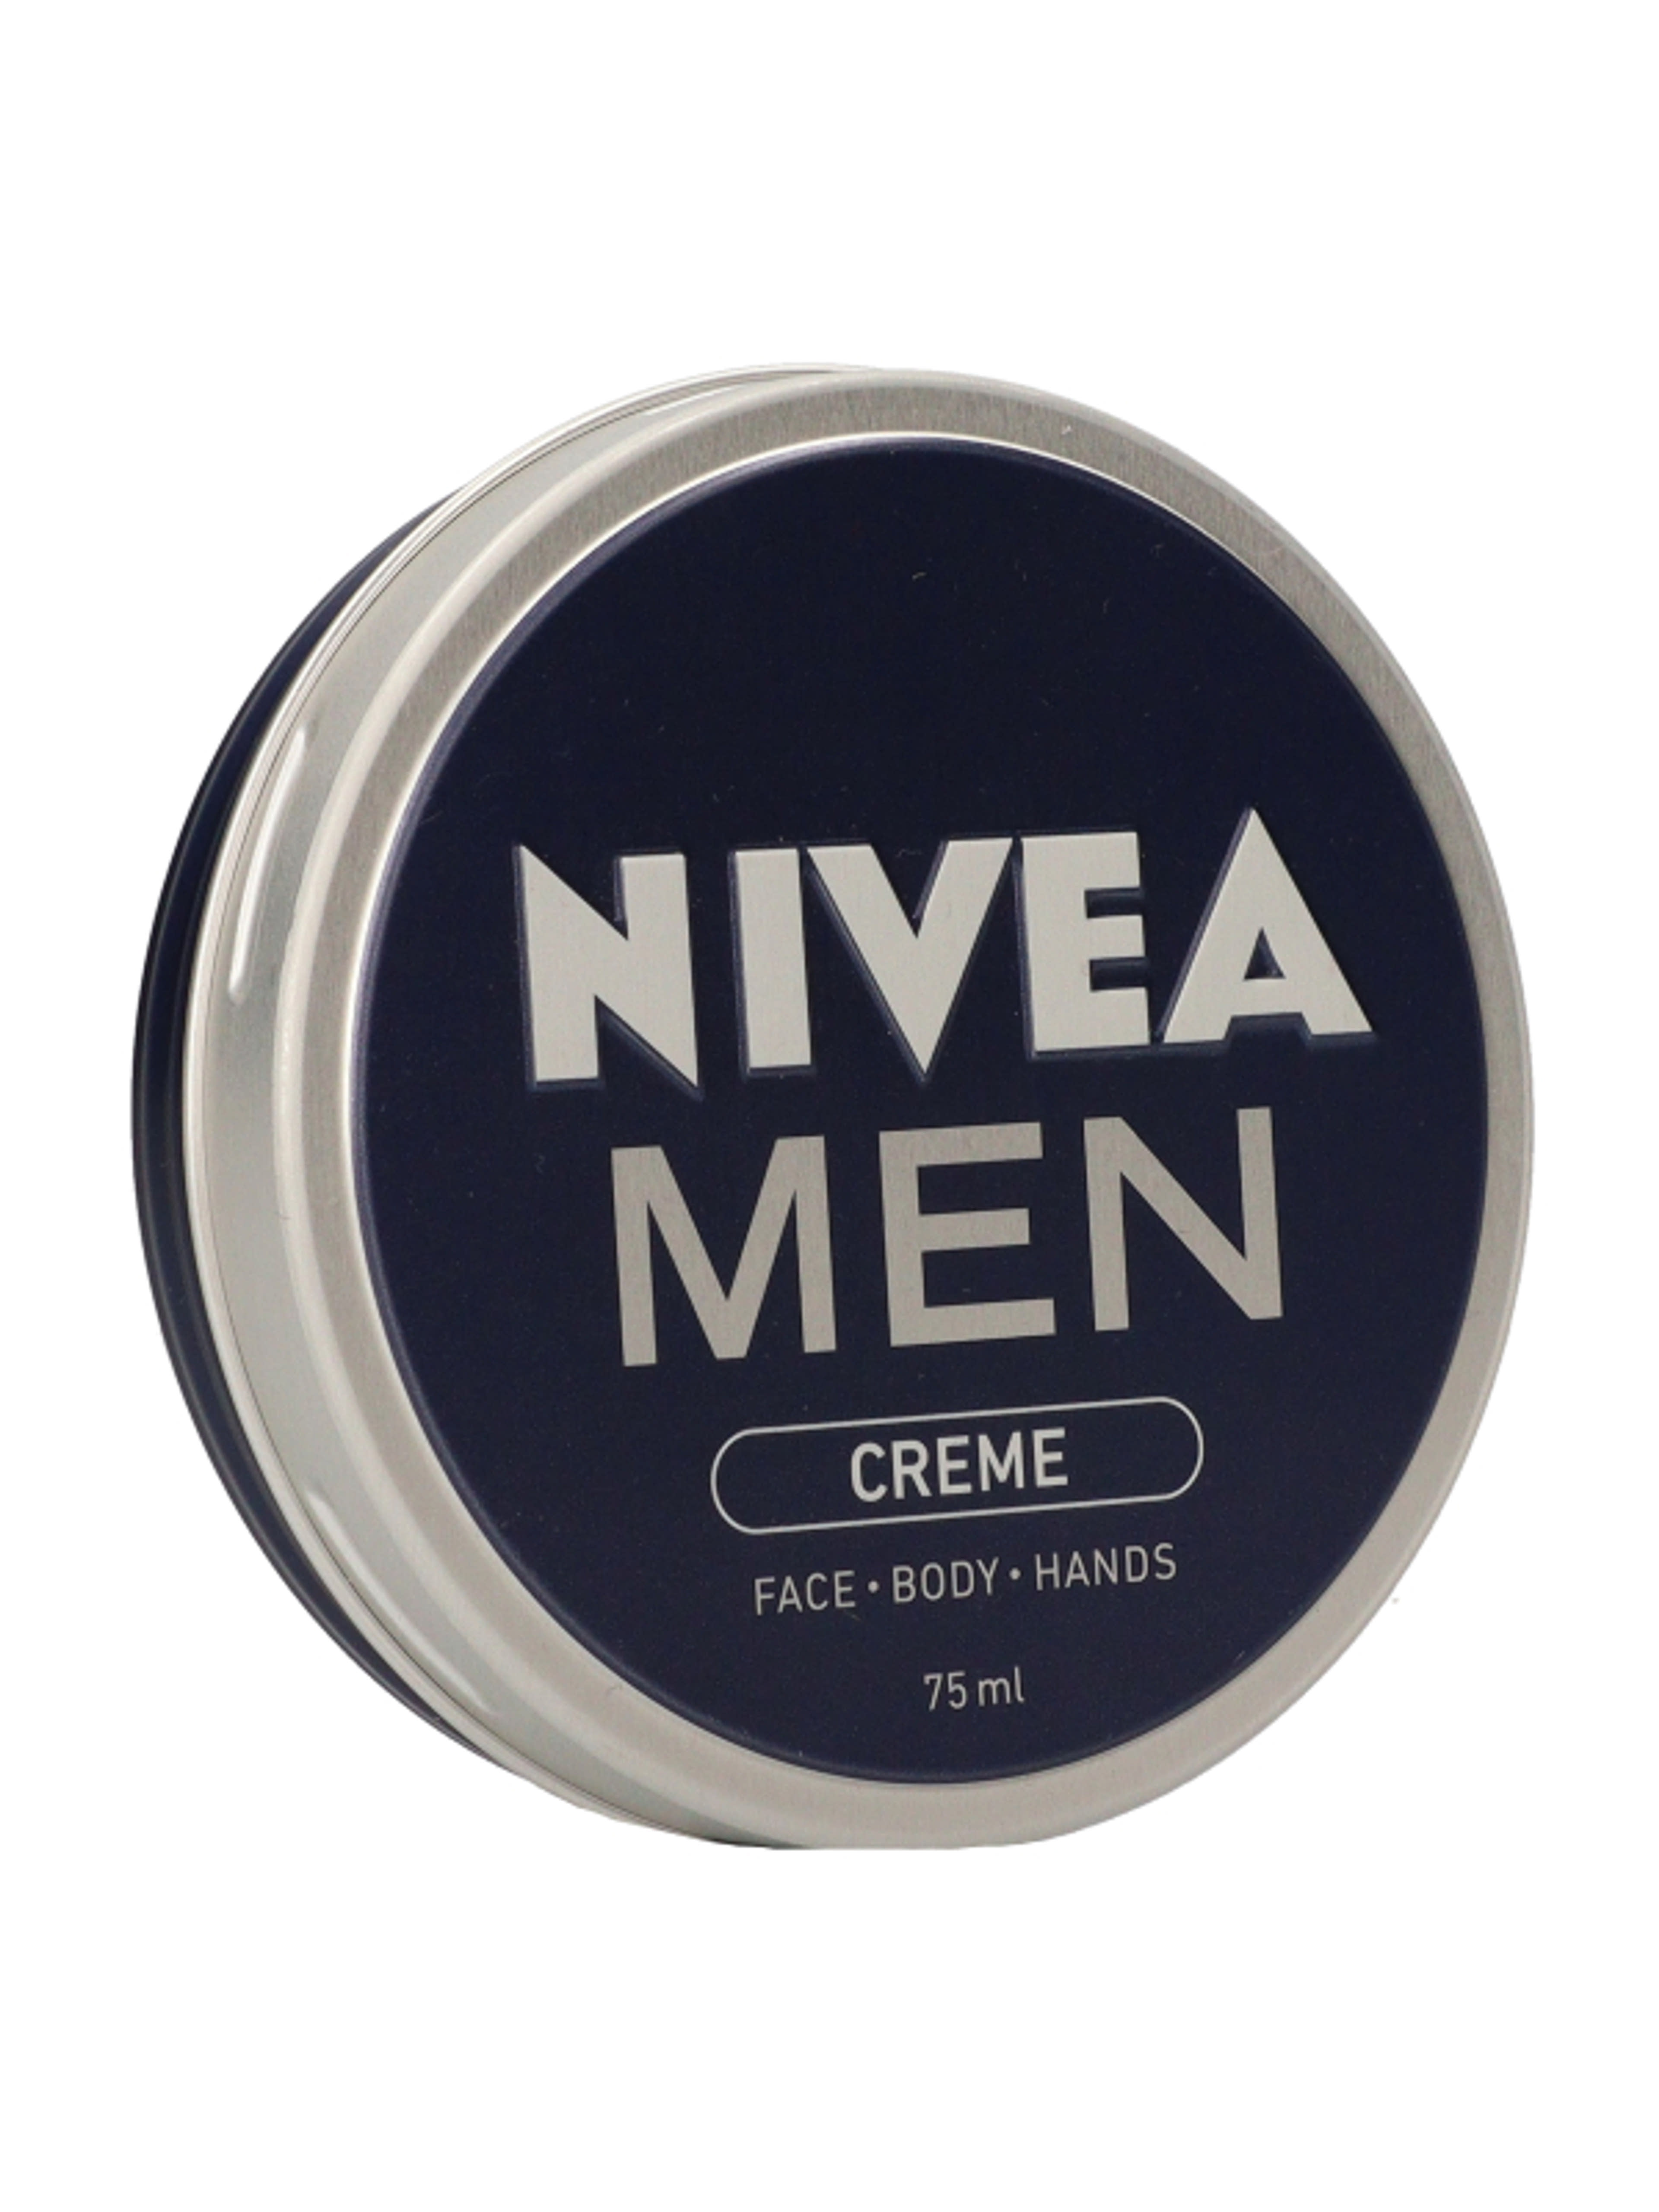 NIVEA MEN Creme - 75 ml-5